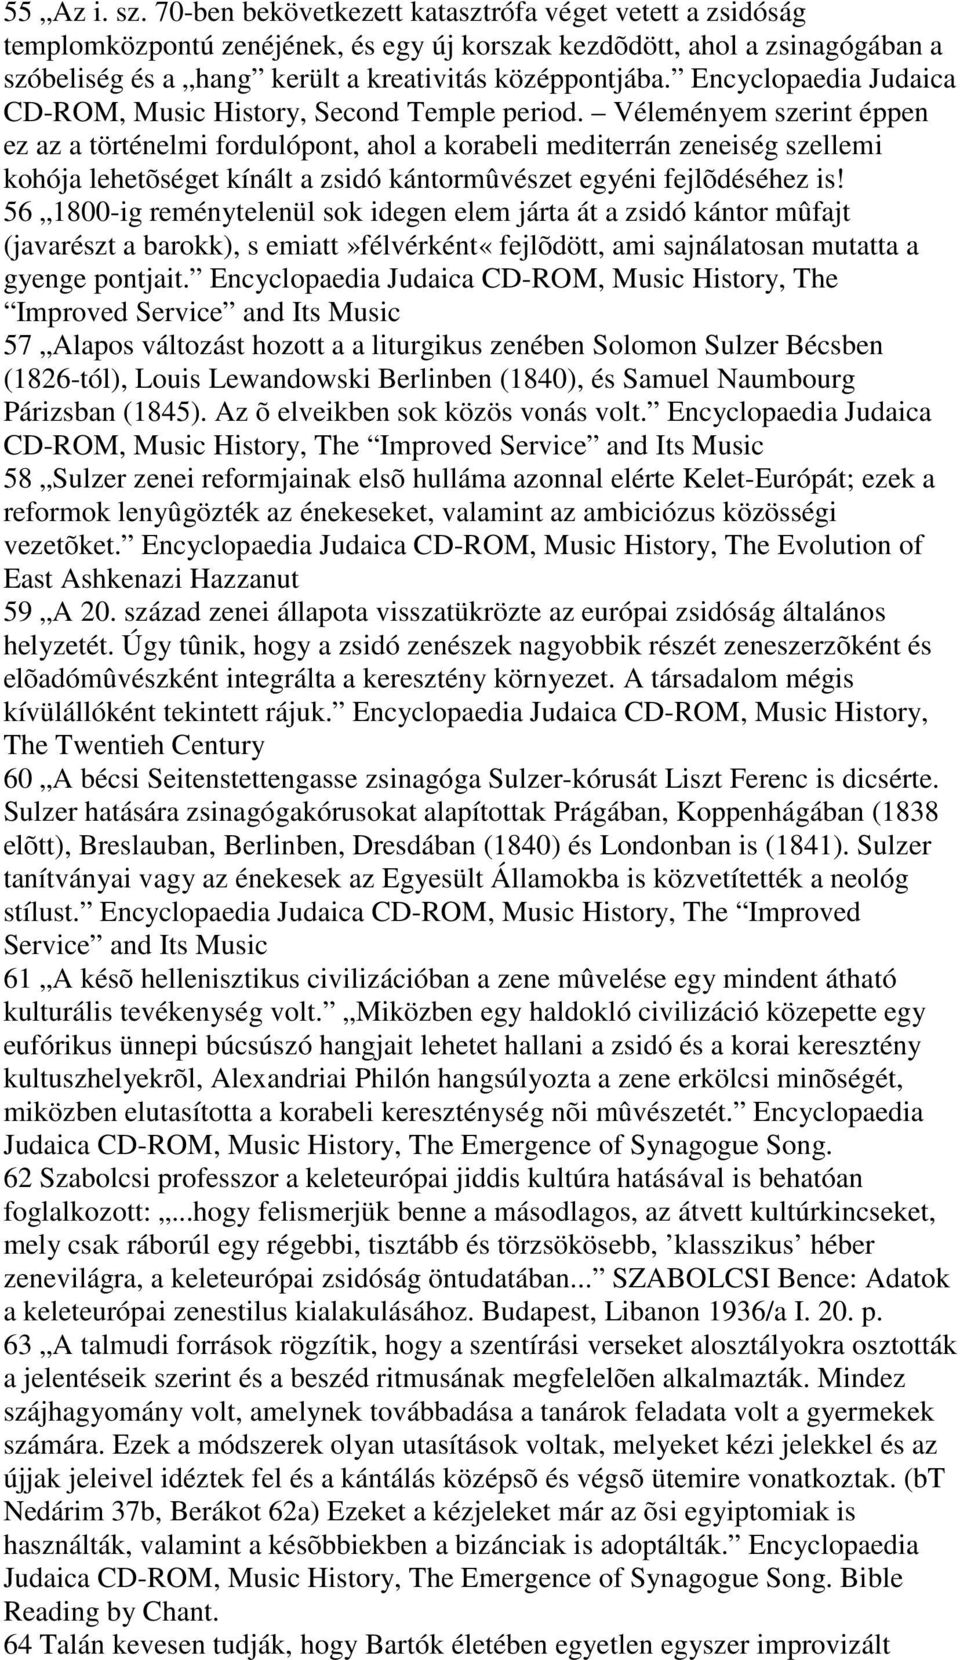 Encyclopaedia Judaica CD-ROM, Music History, Second Temple period.